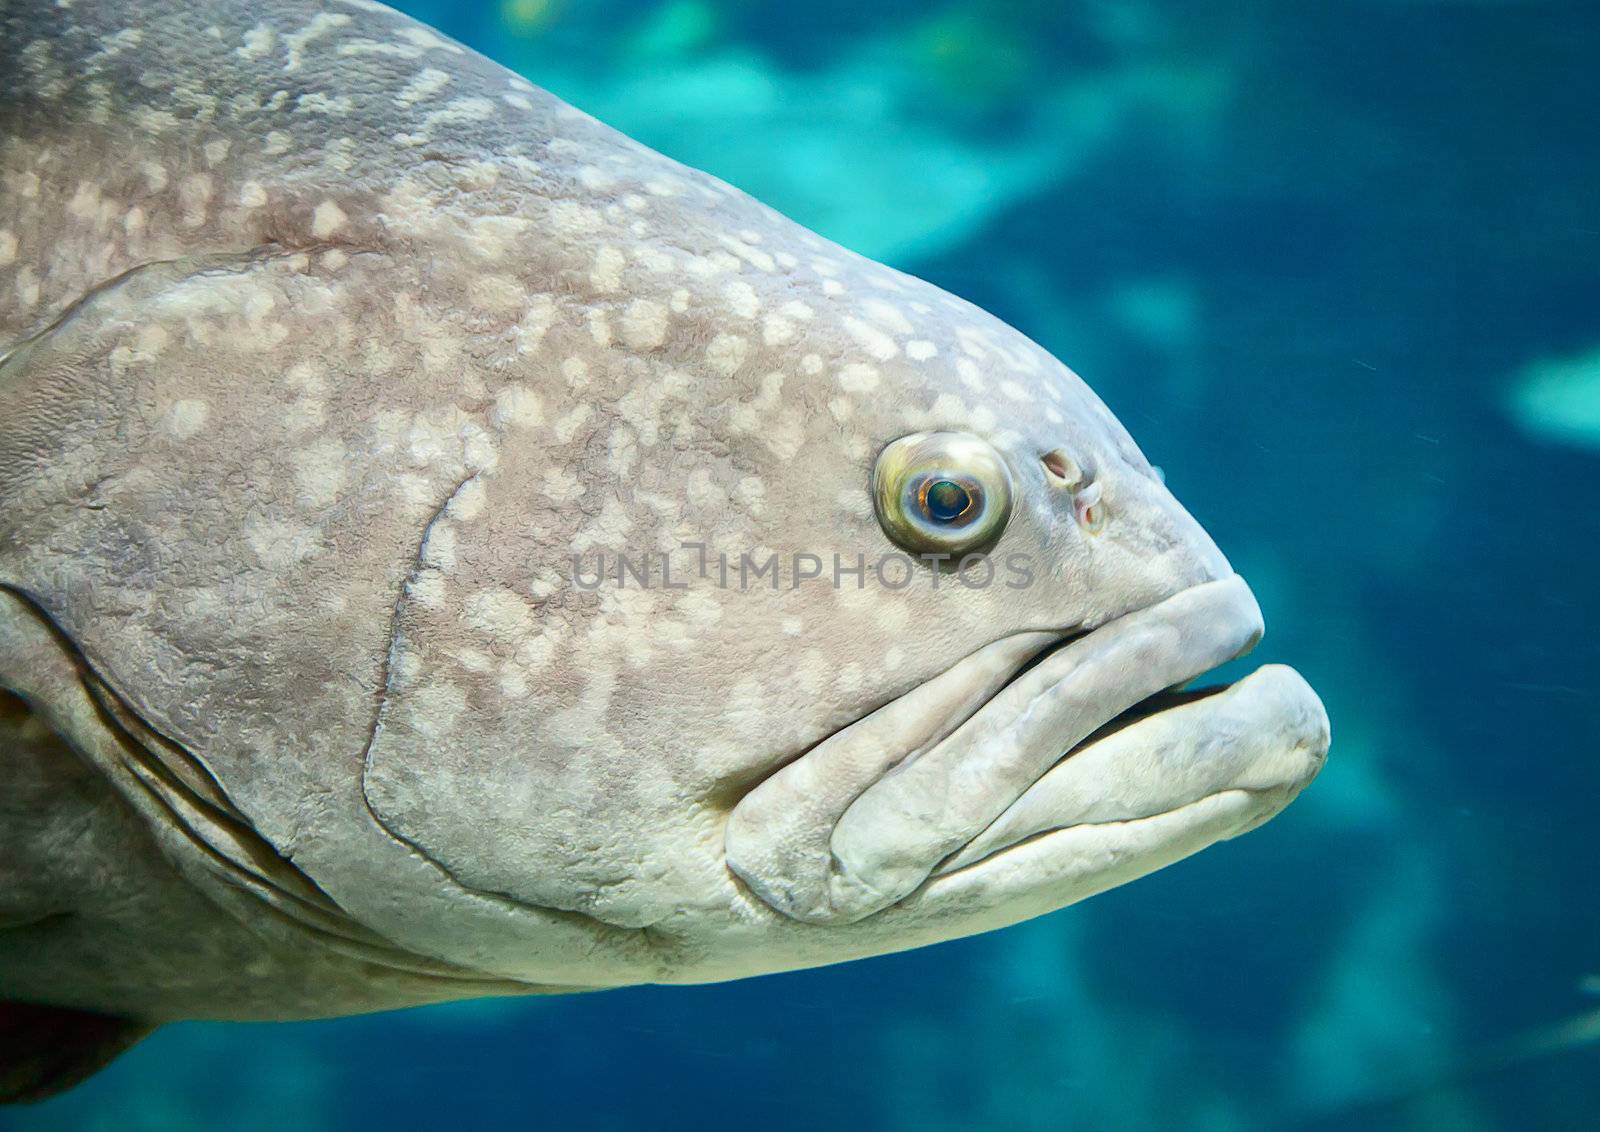 Giant grouper by swisshippo